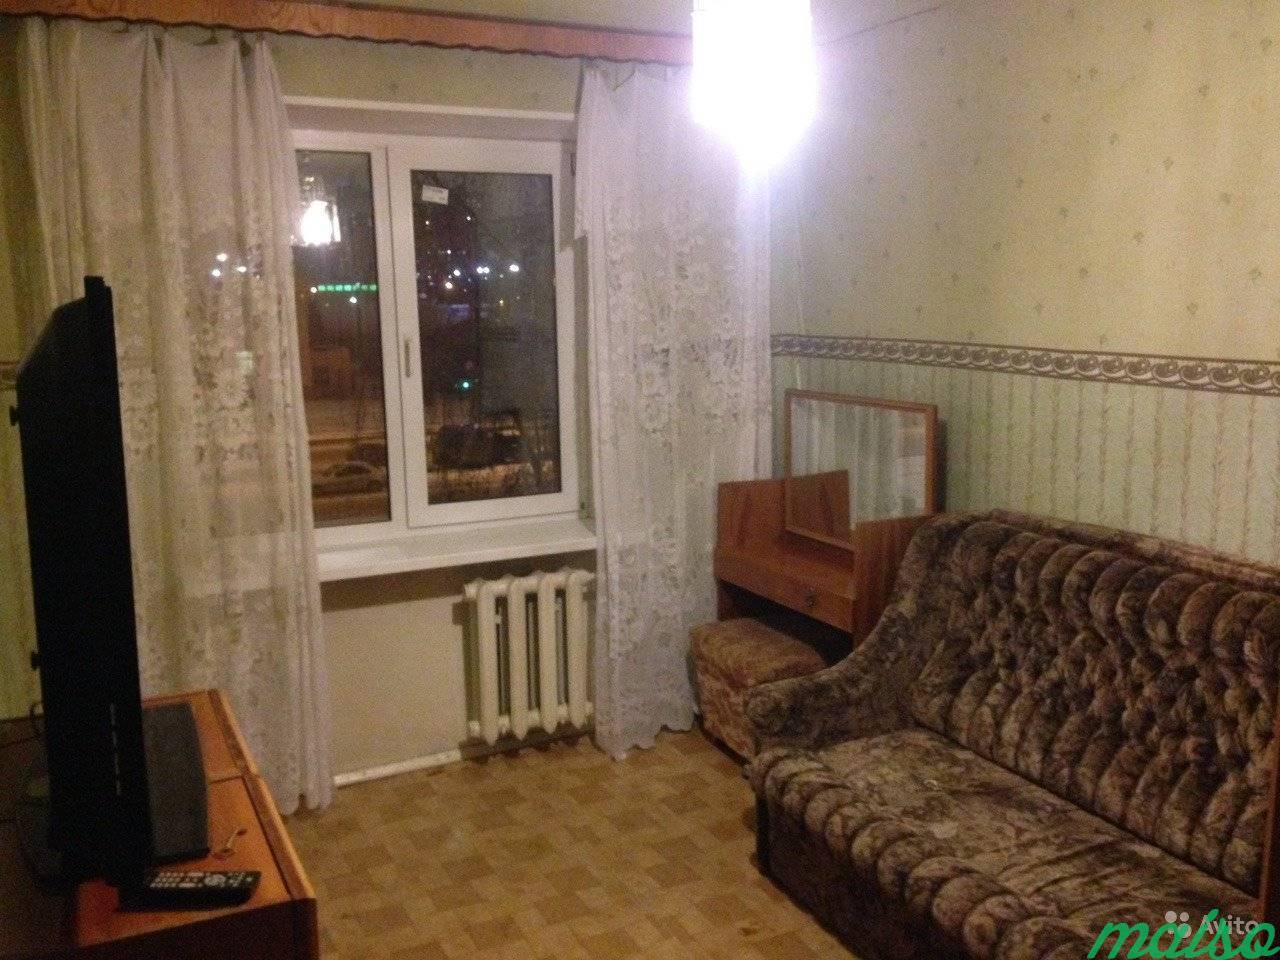 Комната 12 м² в 3-к, 3/10 эт. в Санкт-Петербурге. Фото 3